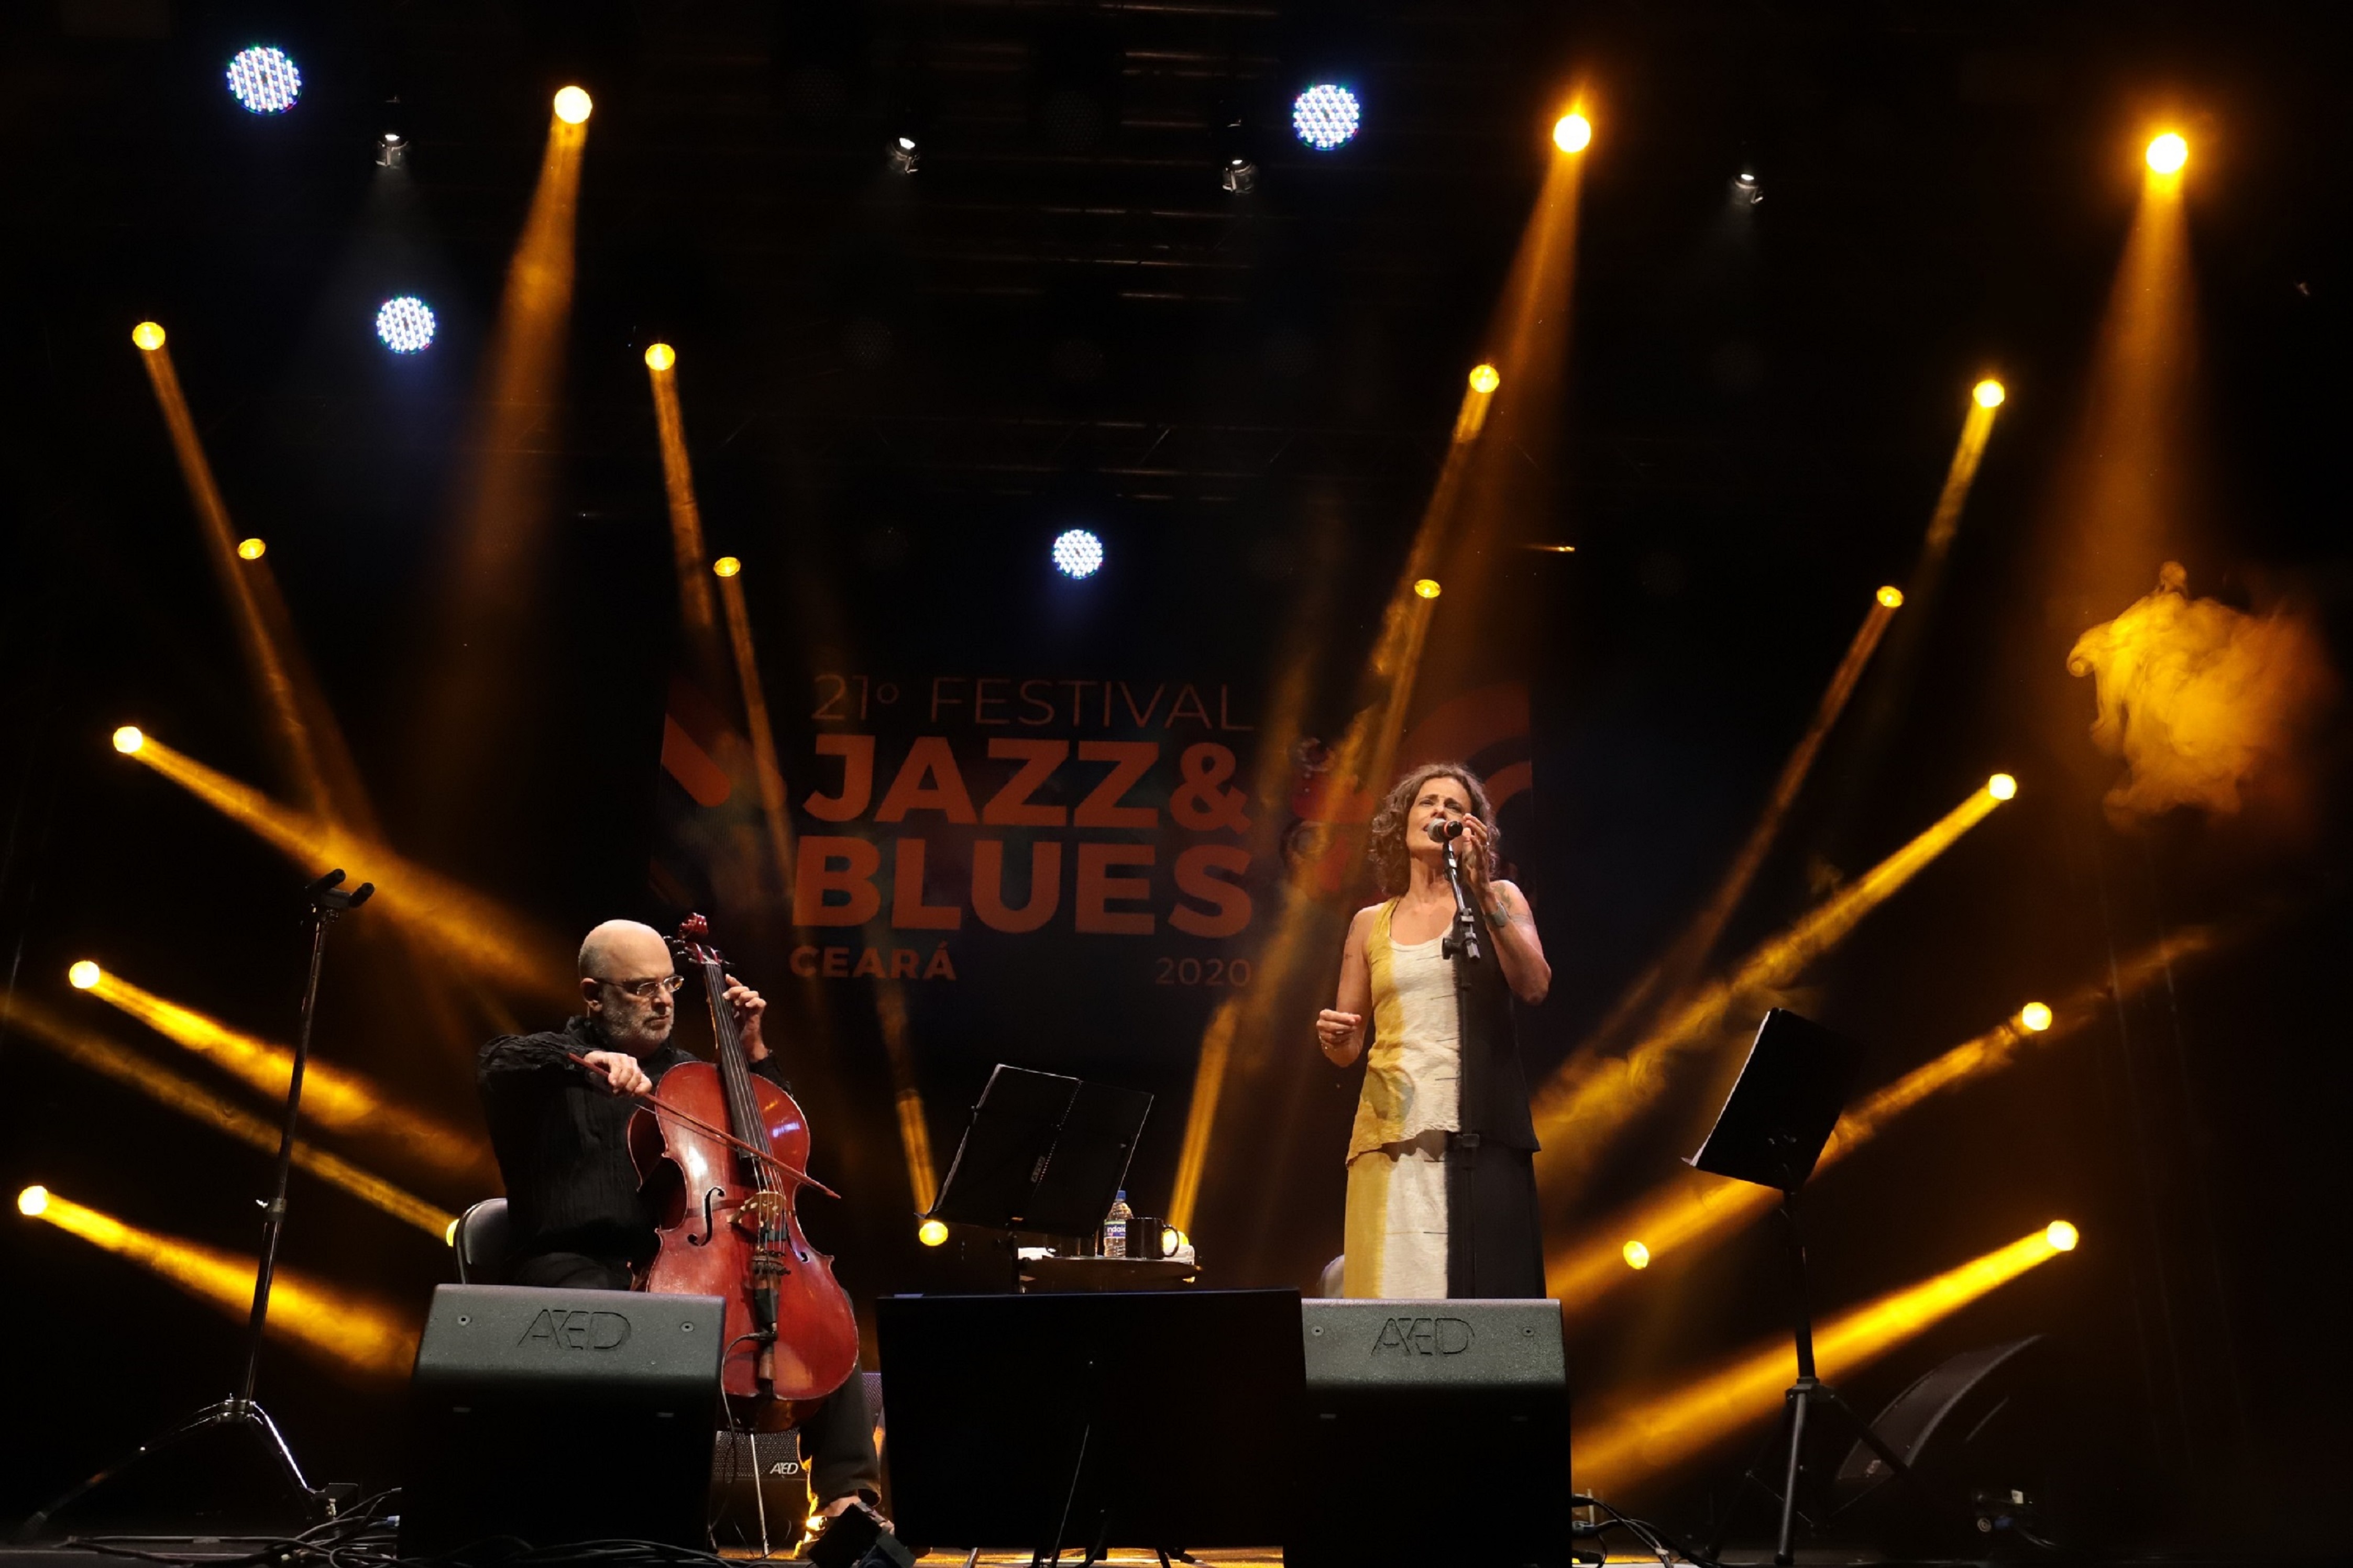 Festival Jazz & Blues chega hoje a Fortaleza